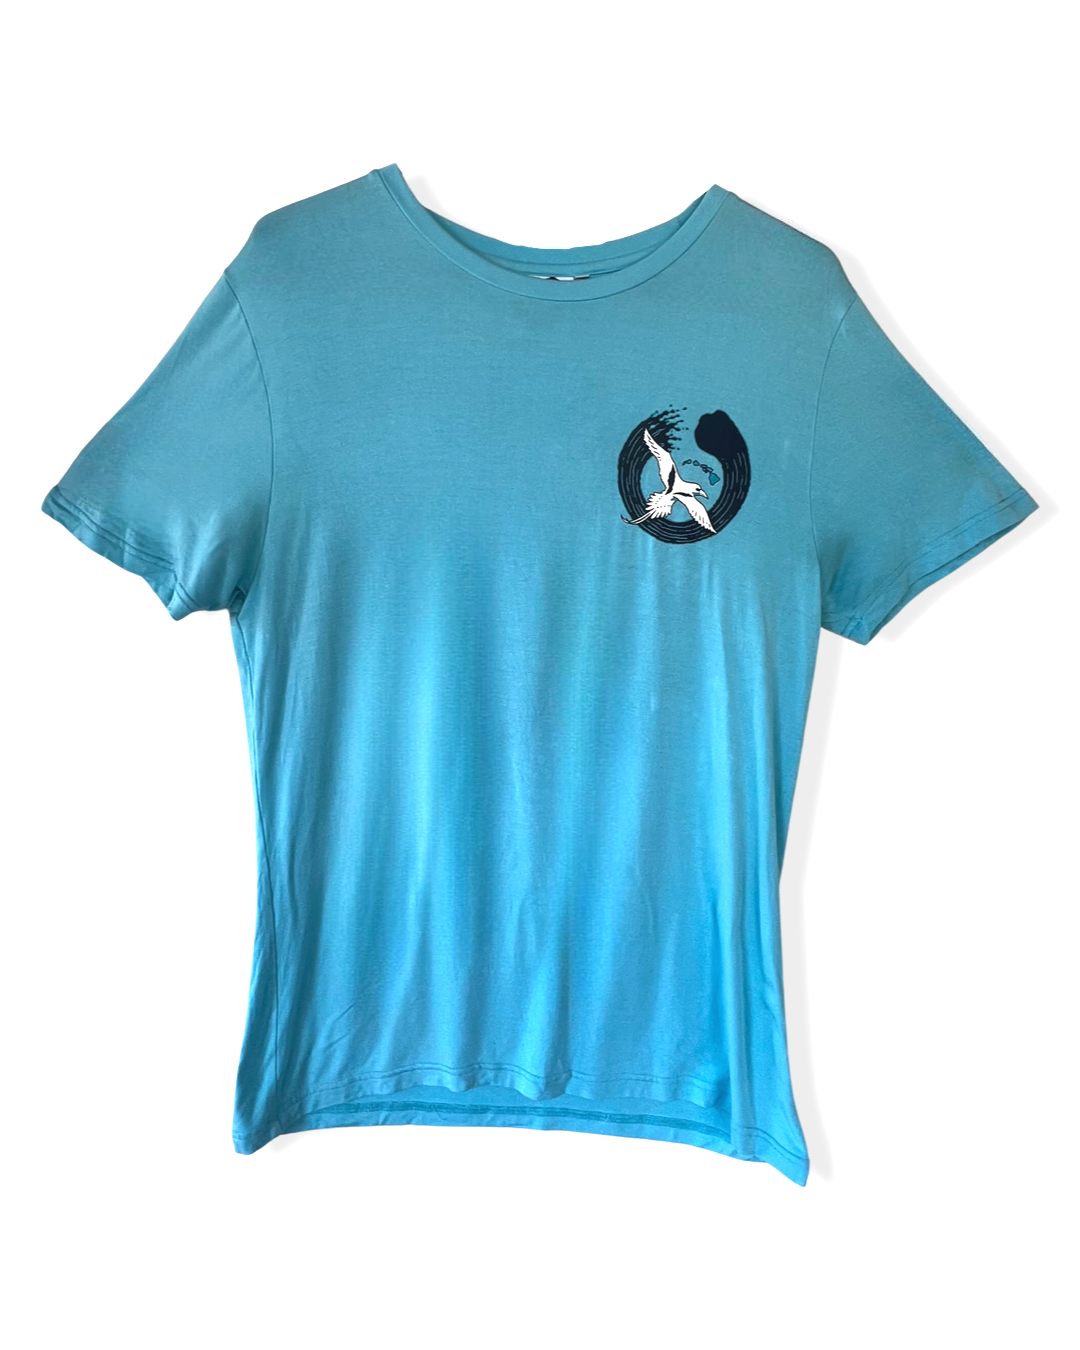 Camiseta unisex de bambú - Tortuga marina verde (azul claro) 